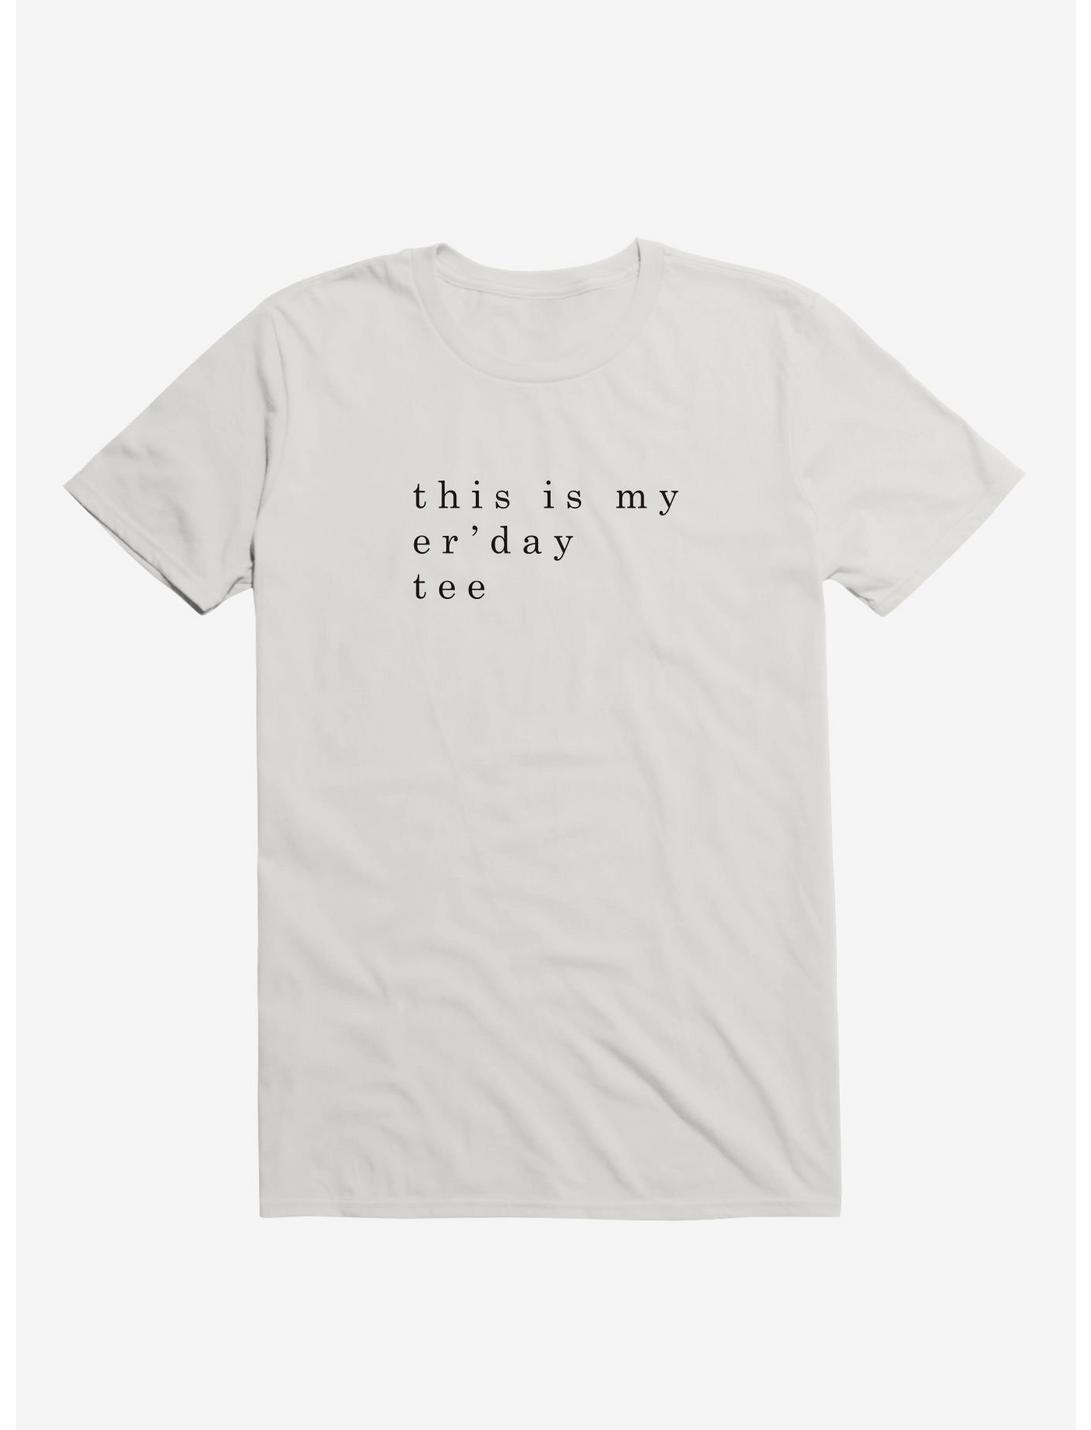 my er'day tee T-Shirt, WHITE, hi-res